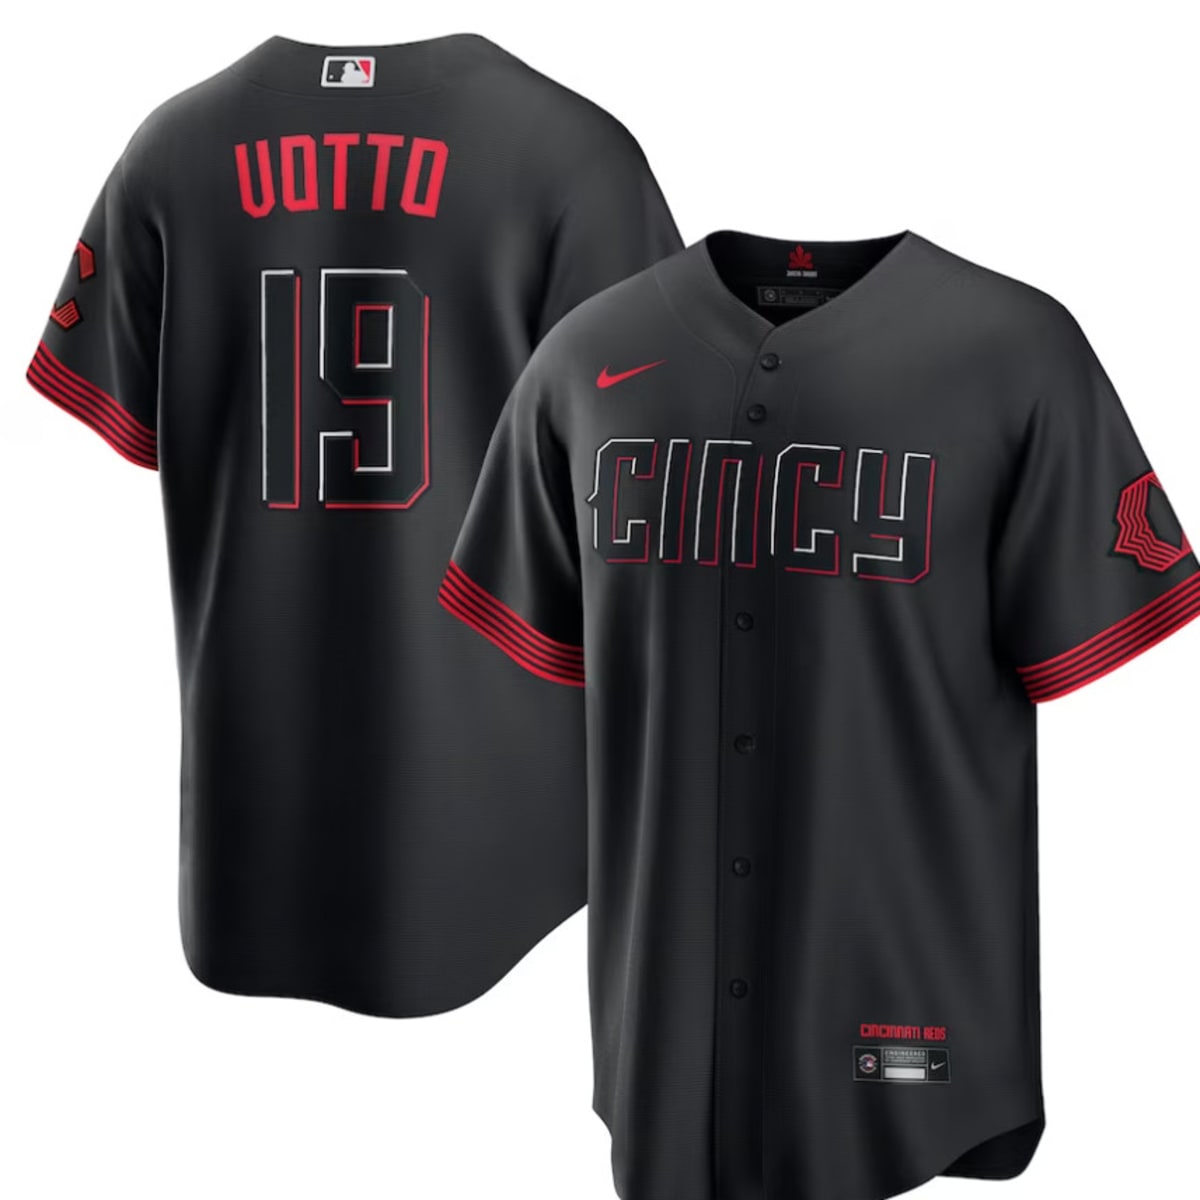 MLB® The Show™ - Cincinnati Reds Nike City Connect Uniform will